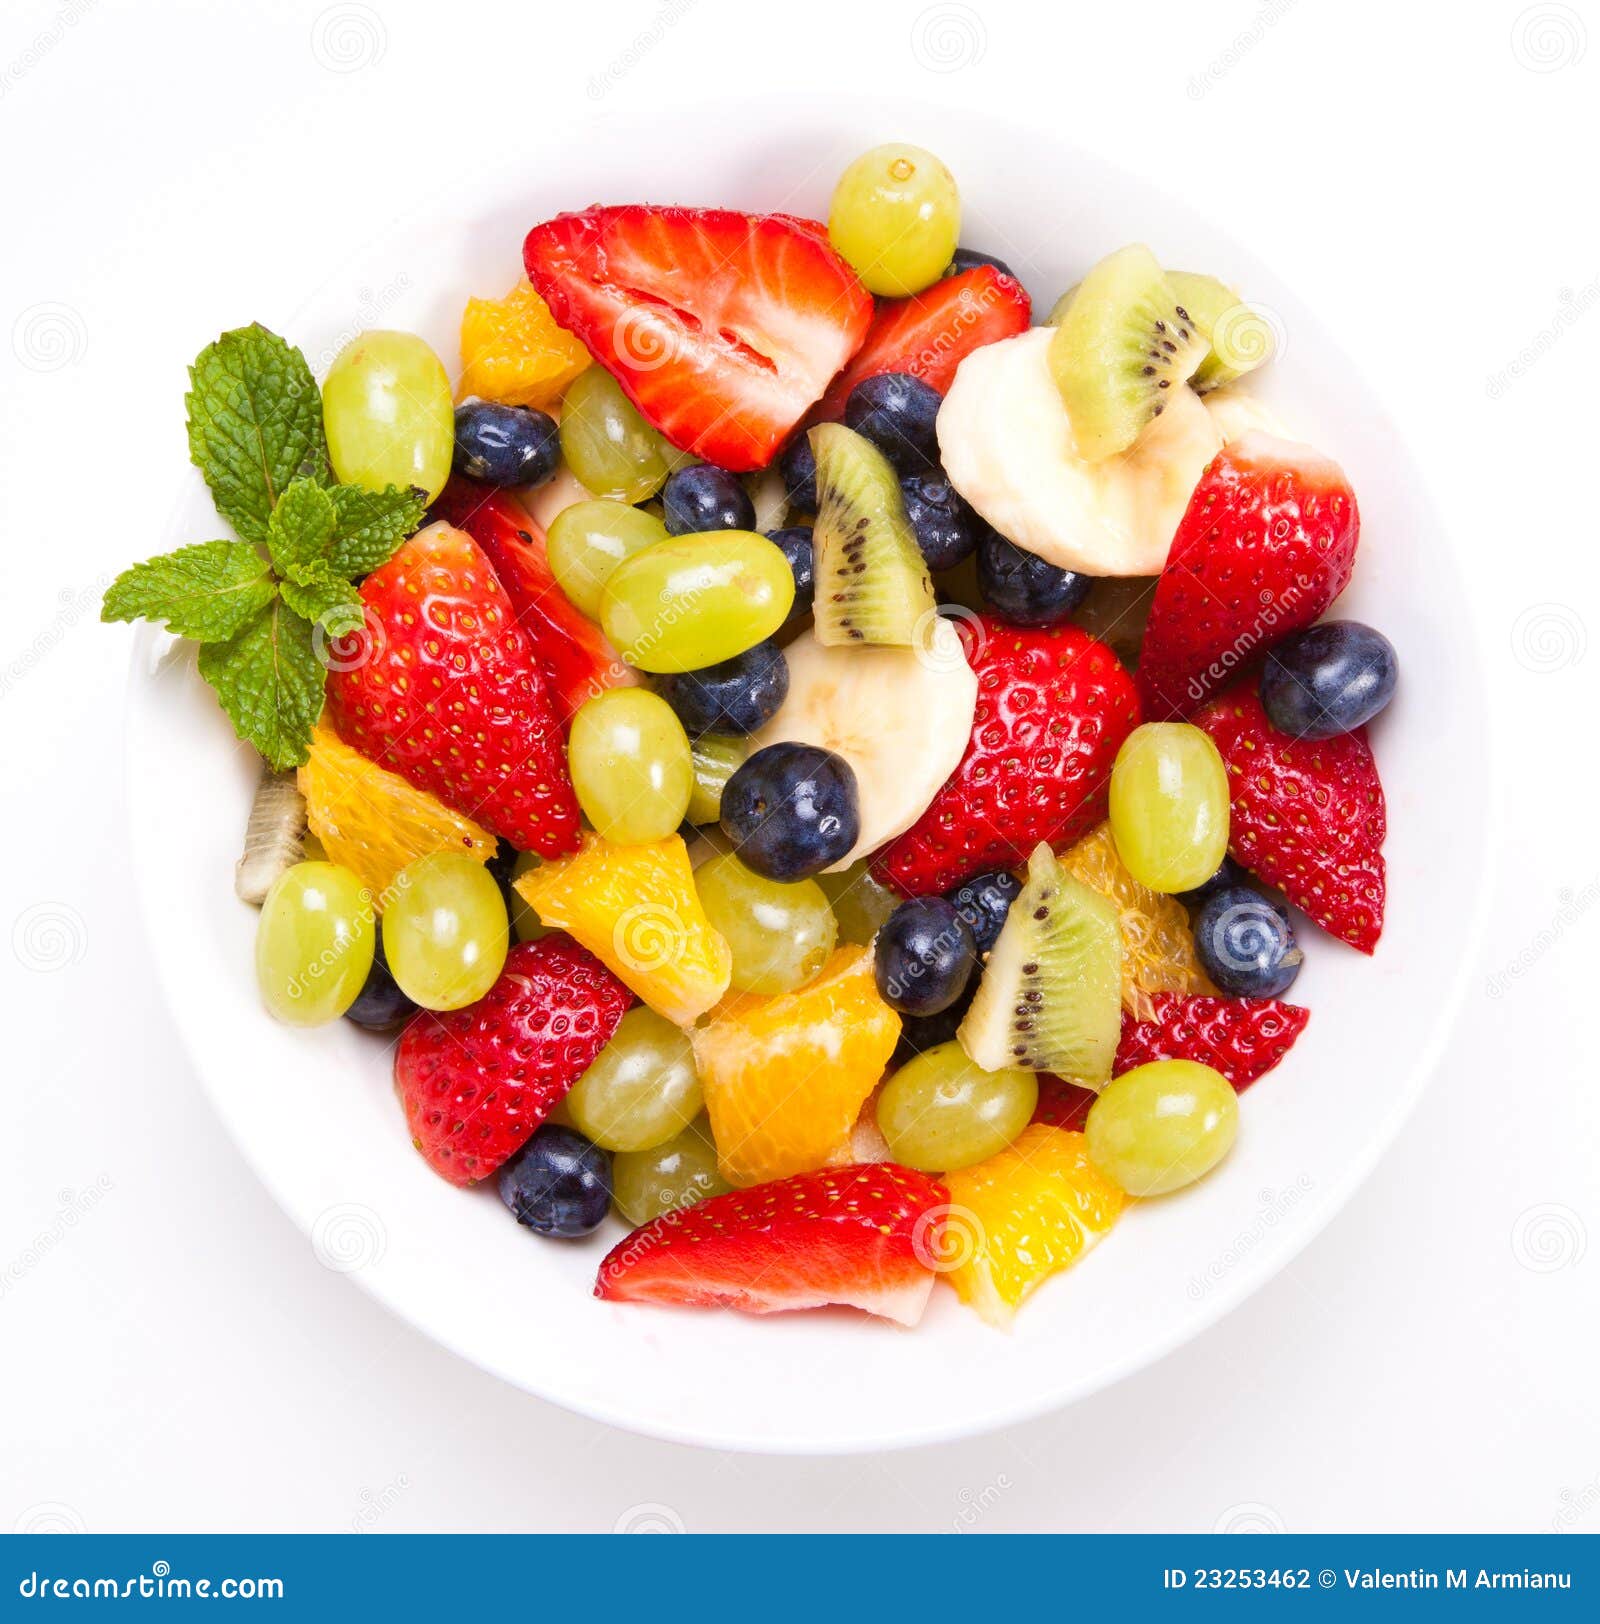 fruit salad clipart free - photo #39